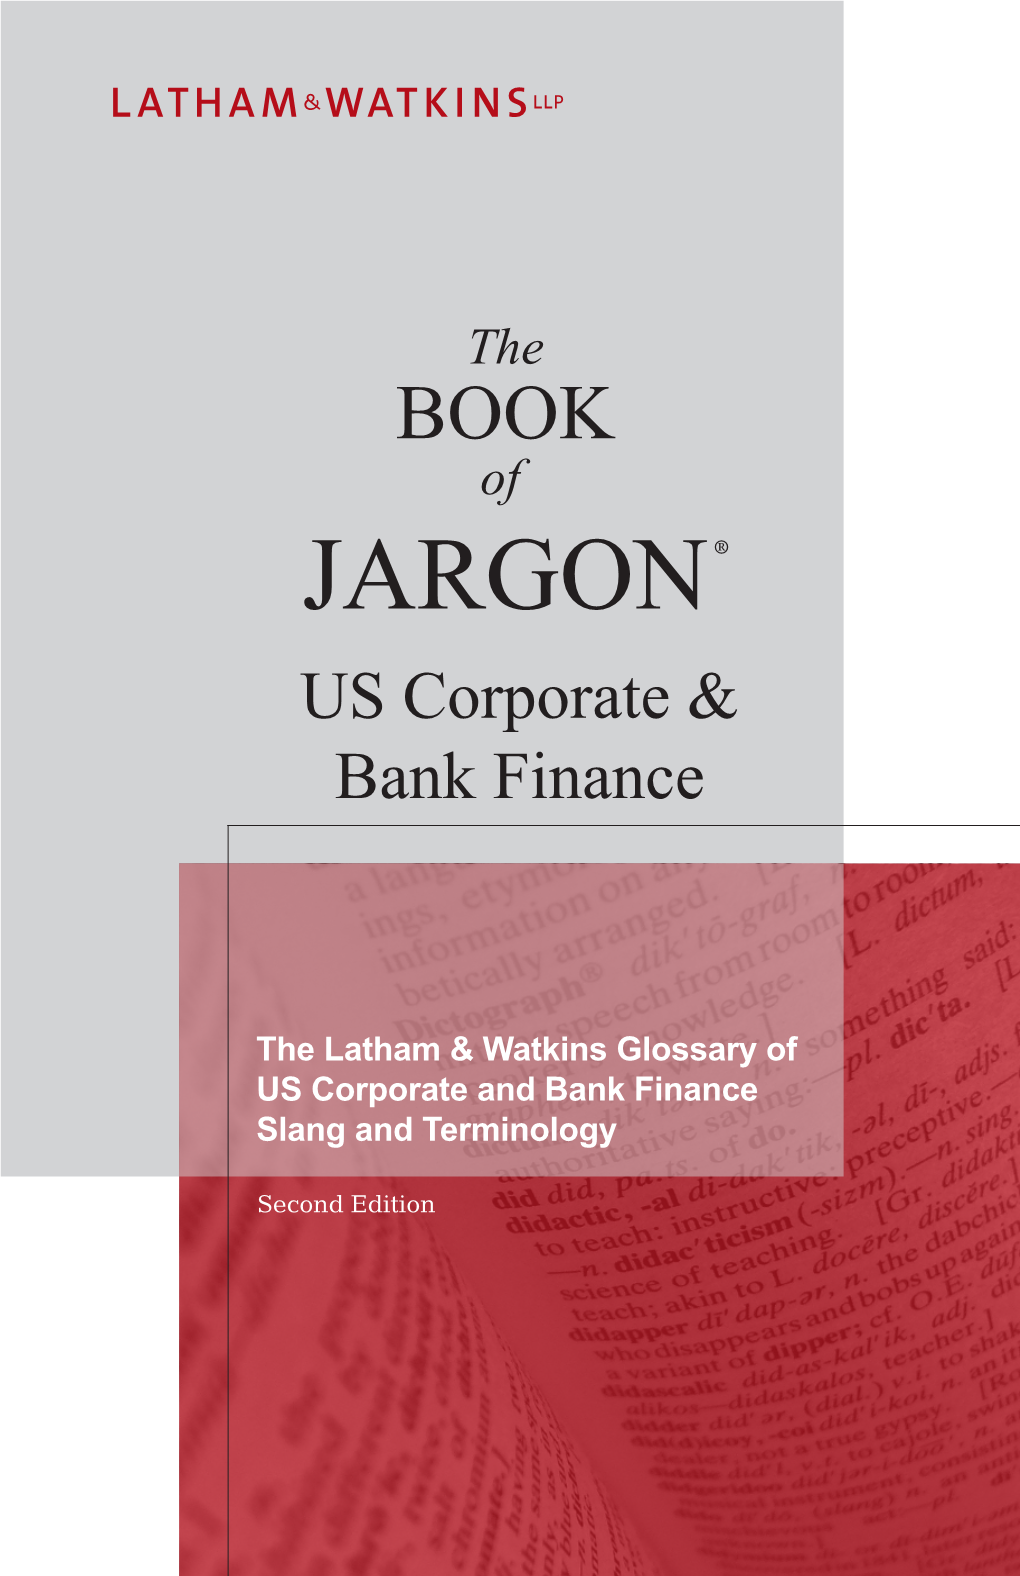 BOOK of JARGON ® US Corporate & Bank Finance